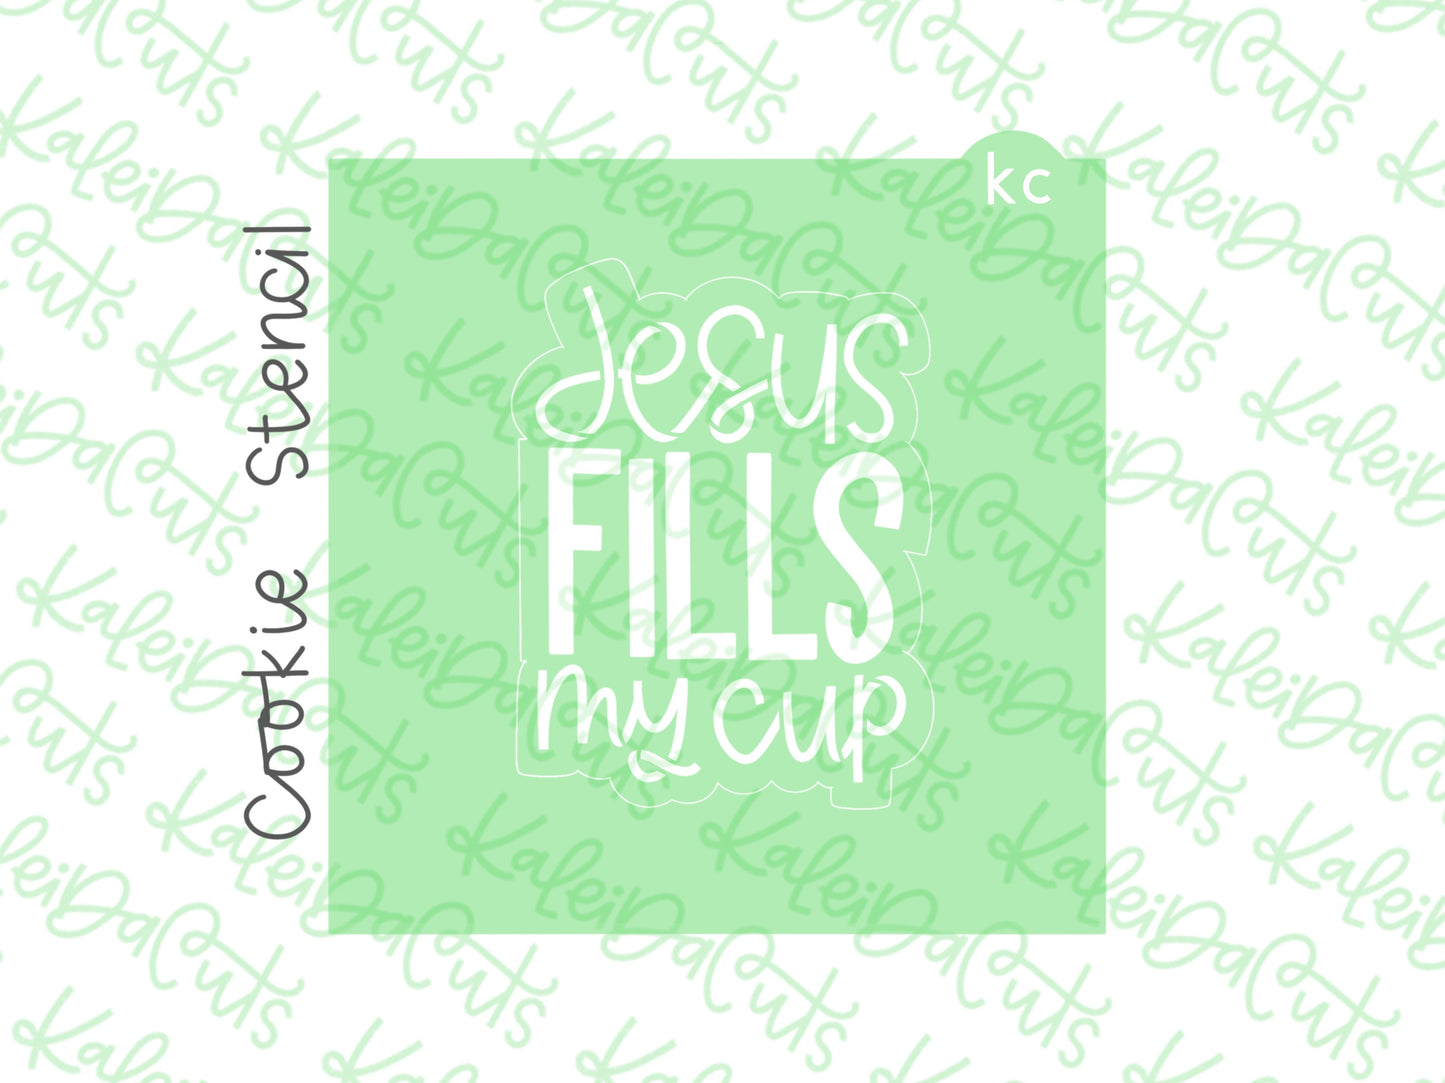 Jesus Fills My Cup Stencil